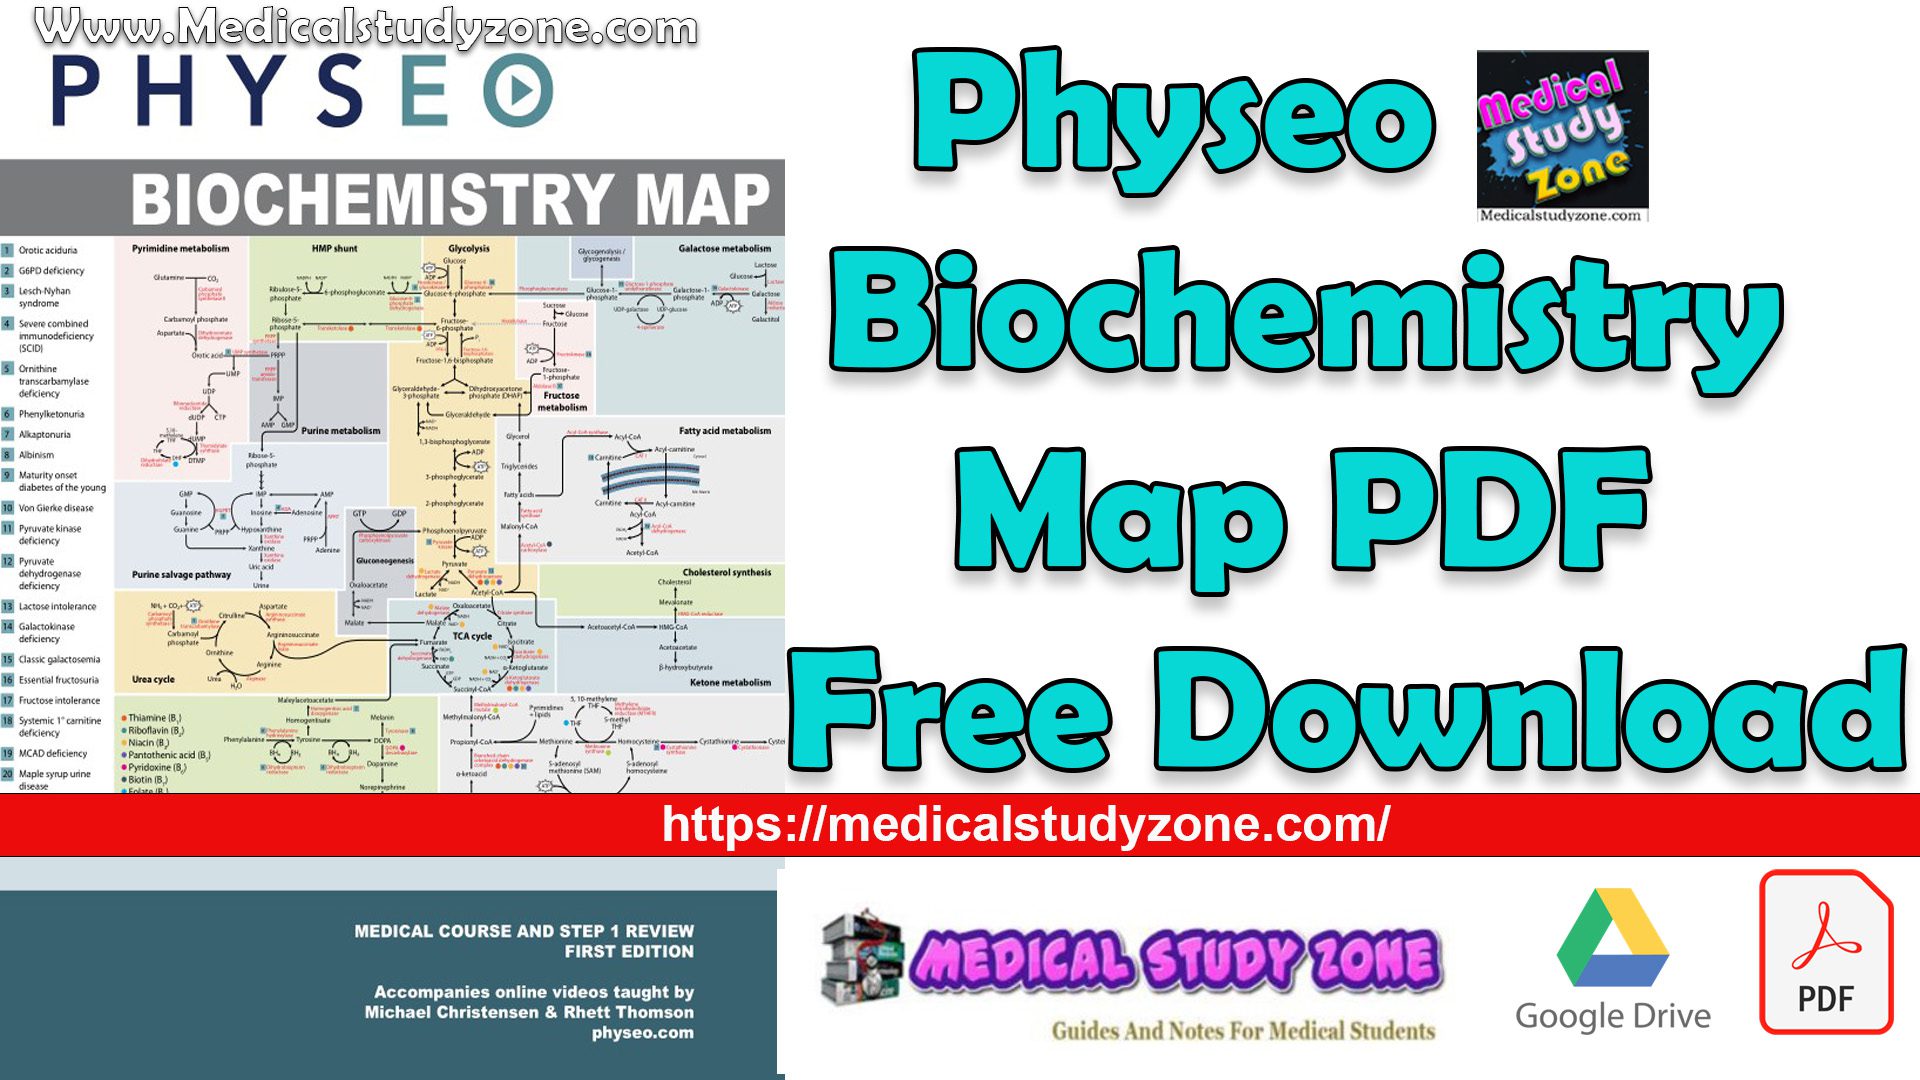 Physeo Biochemistry Map PDF Free Download